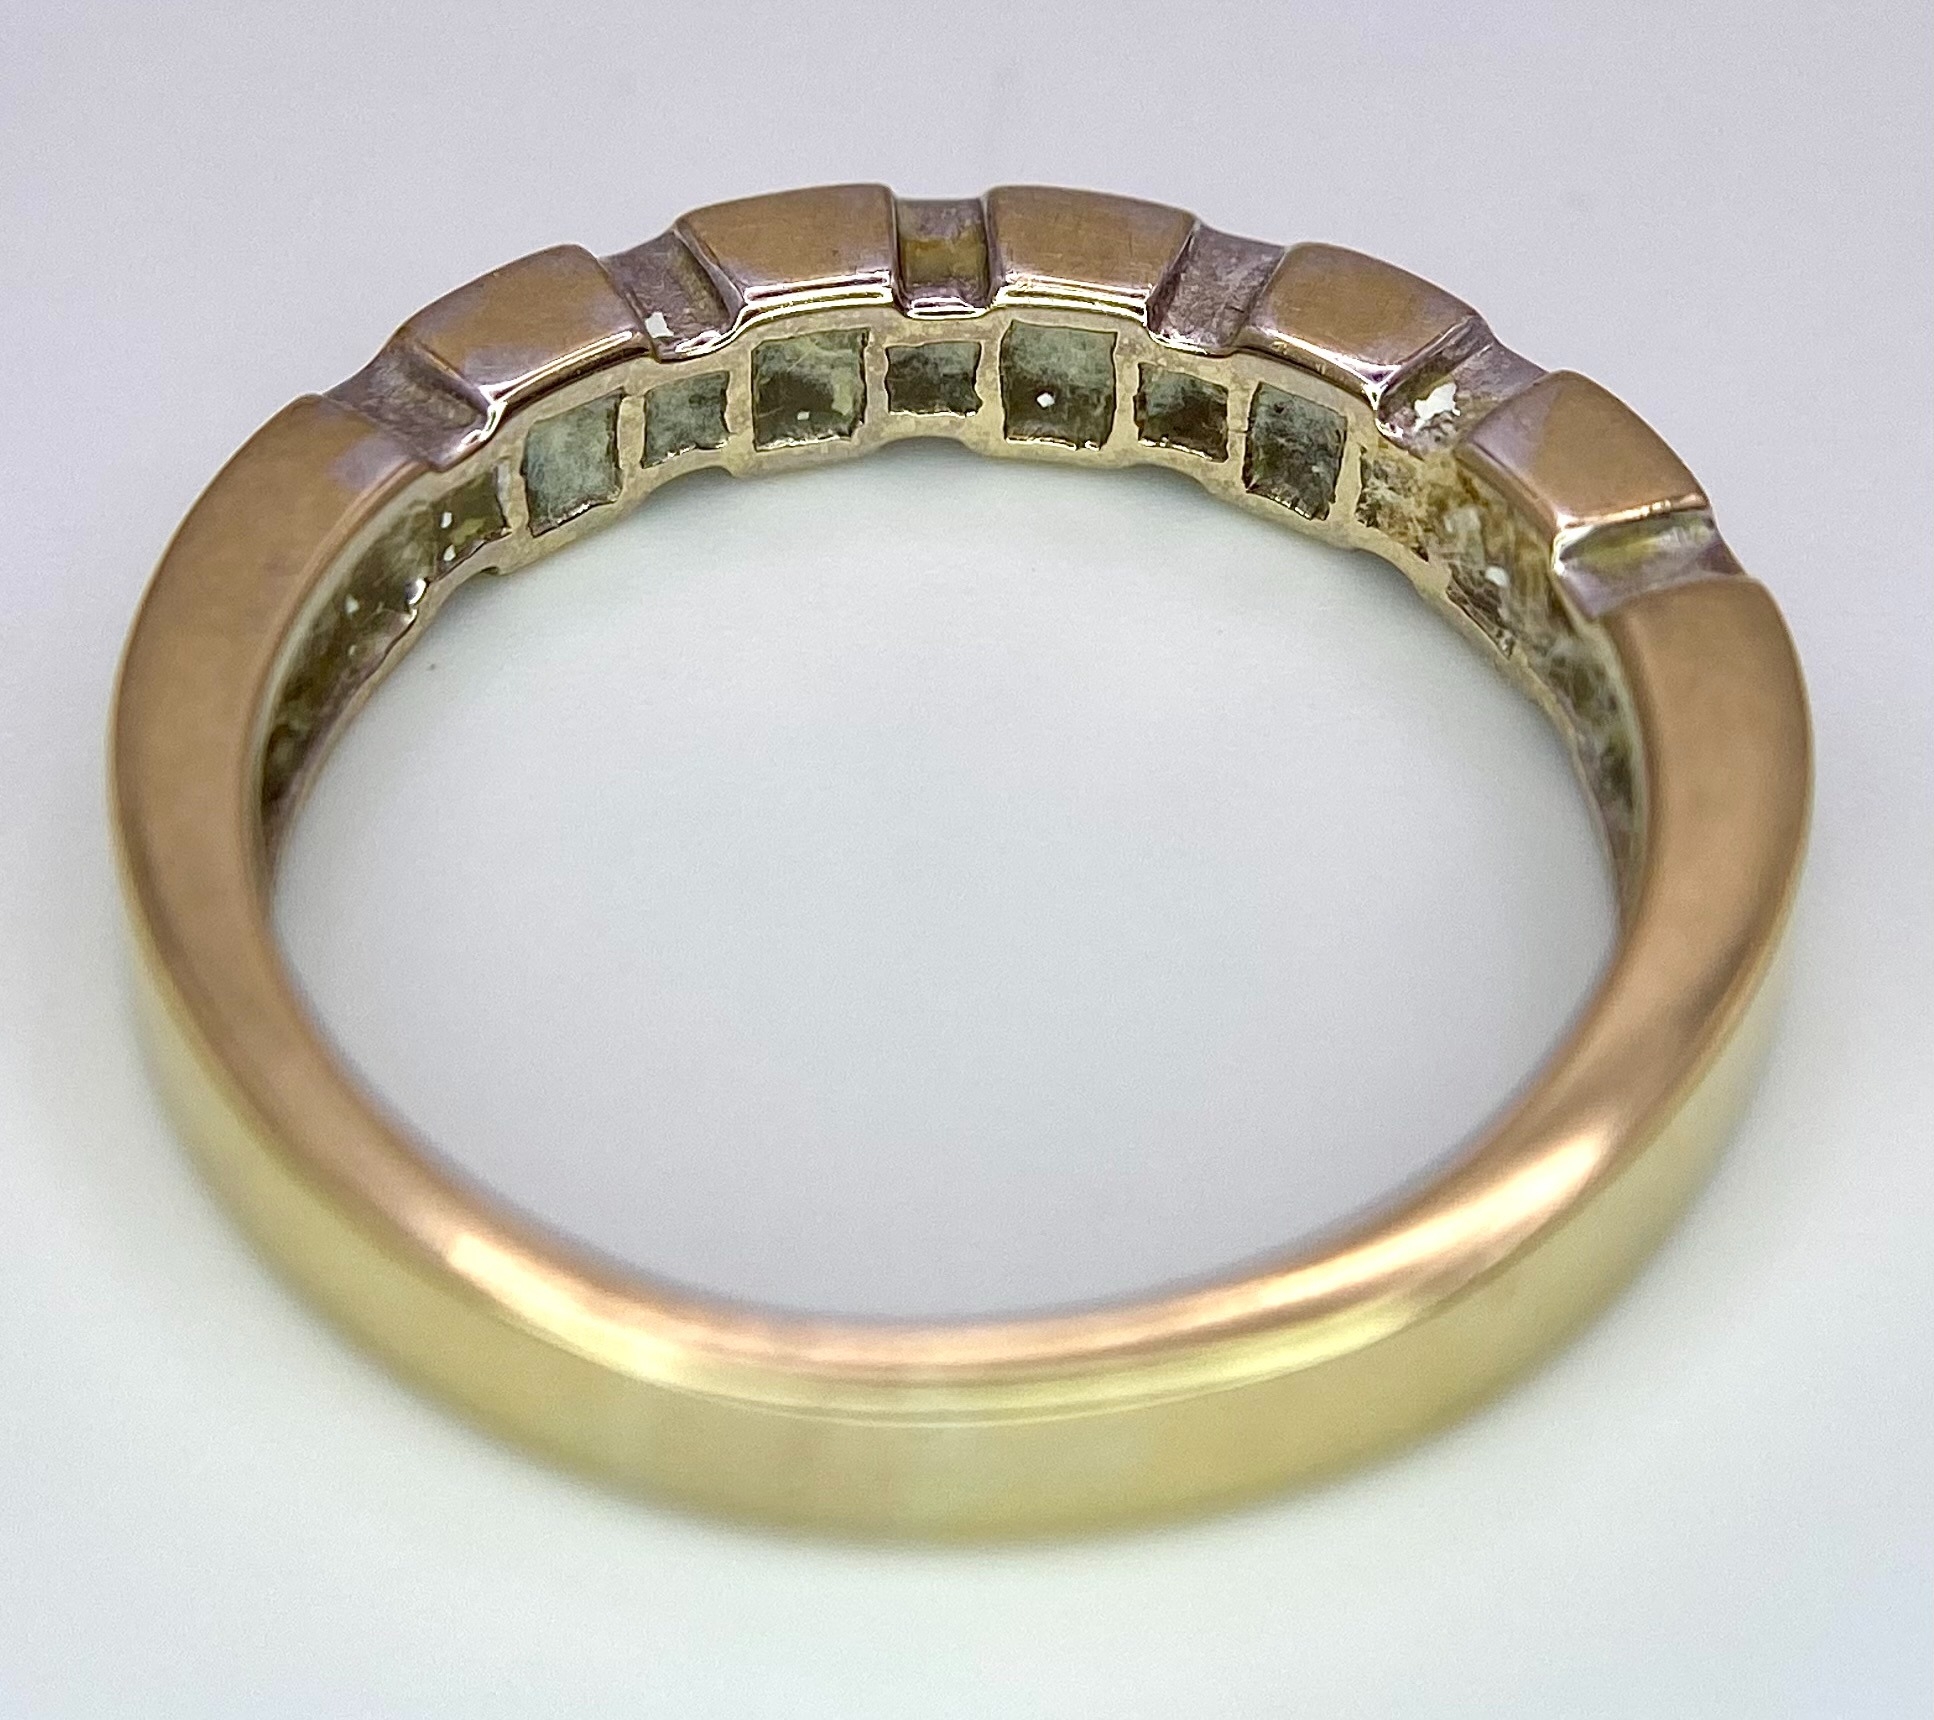 An 18K Yellow Gold Diamond Half-Eternity Ring. Mixed cut diamonds - 0.50ctw. Size P. 4.1g total - Image 5 of 6